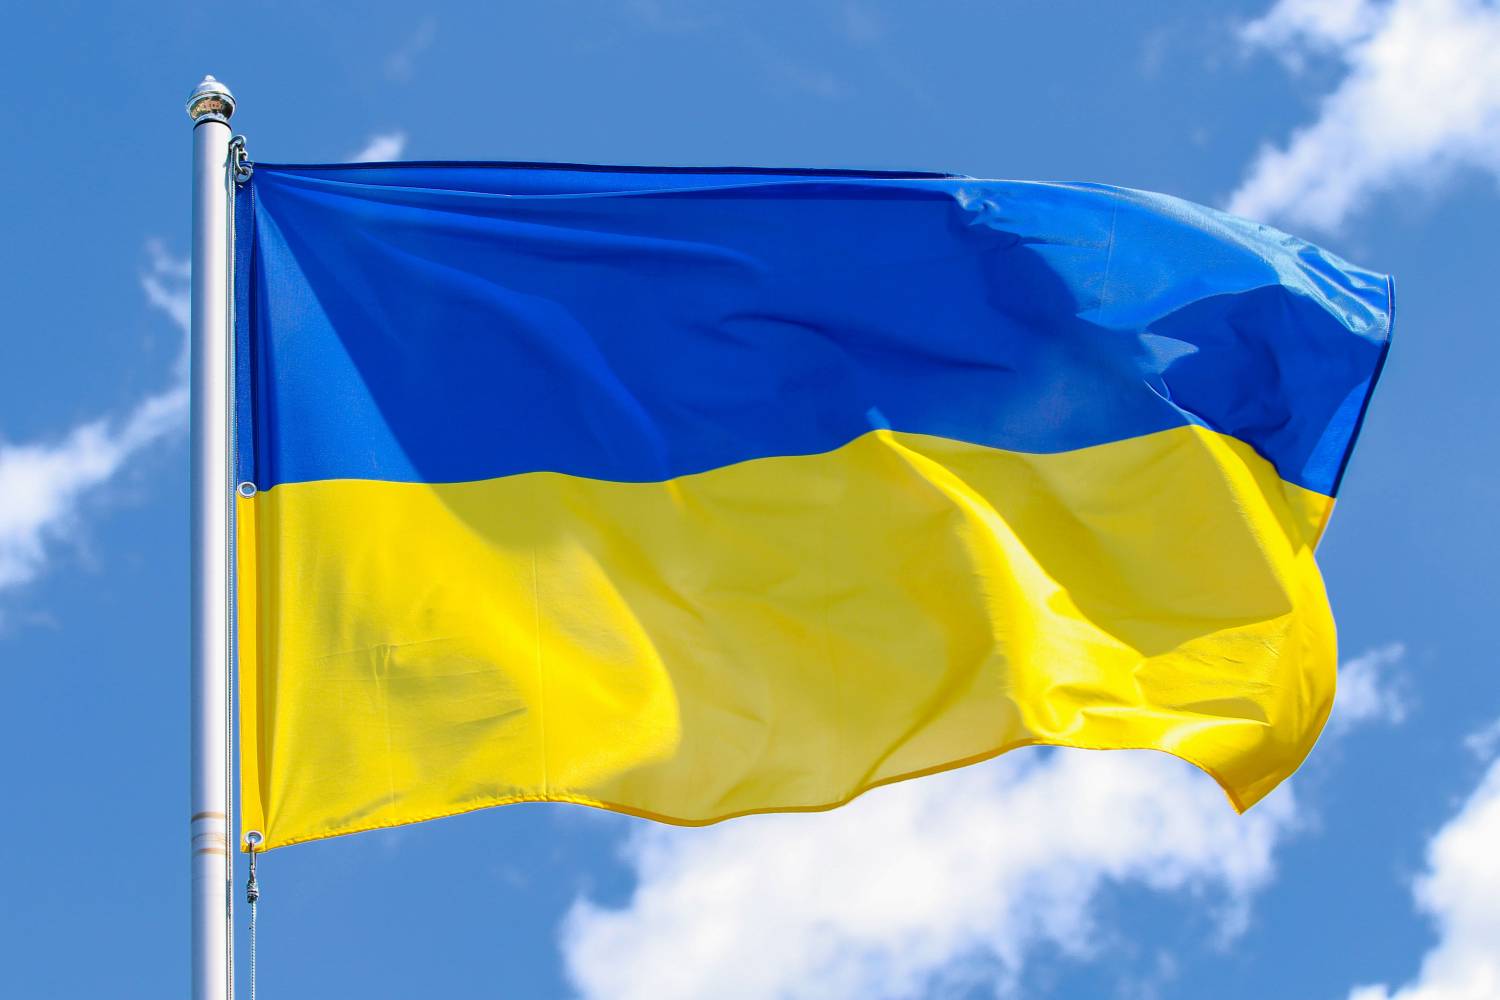 MCI | Entrepreneurial school® shows solidarity with Ukrainian students. ©Adobe Stock